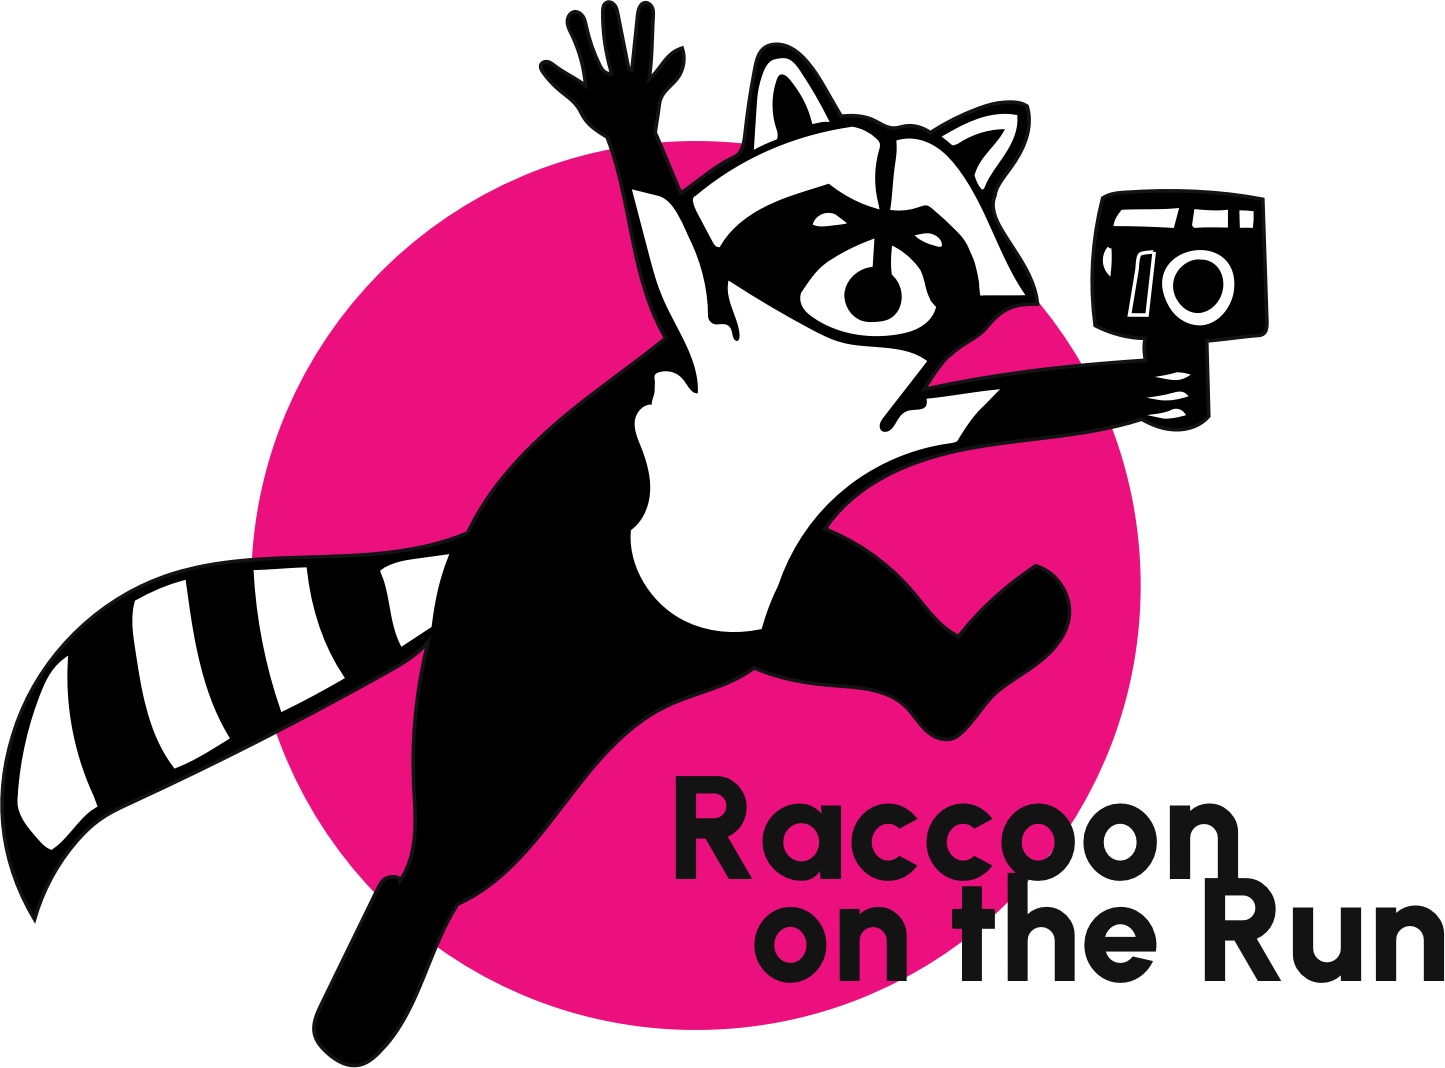 Raccoon on the Run logo - a raccoon jumping with a camera